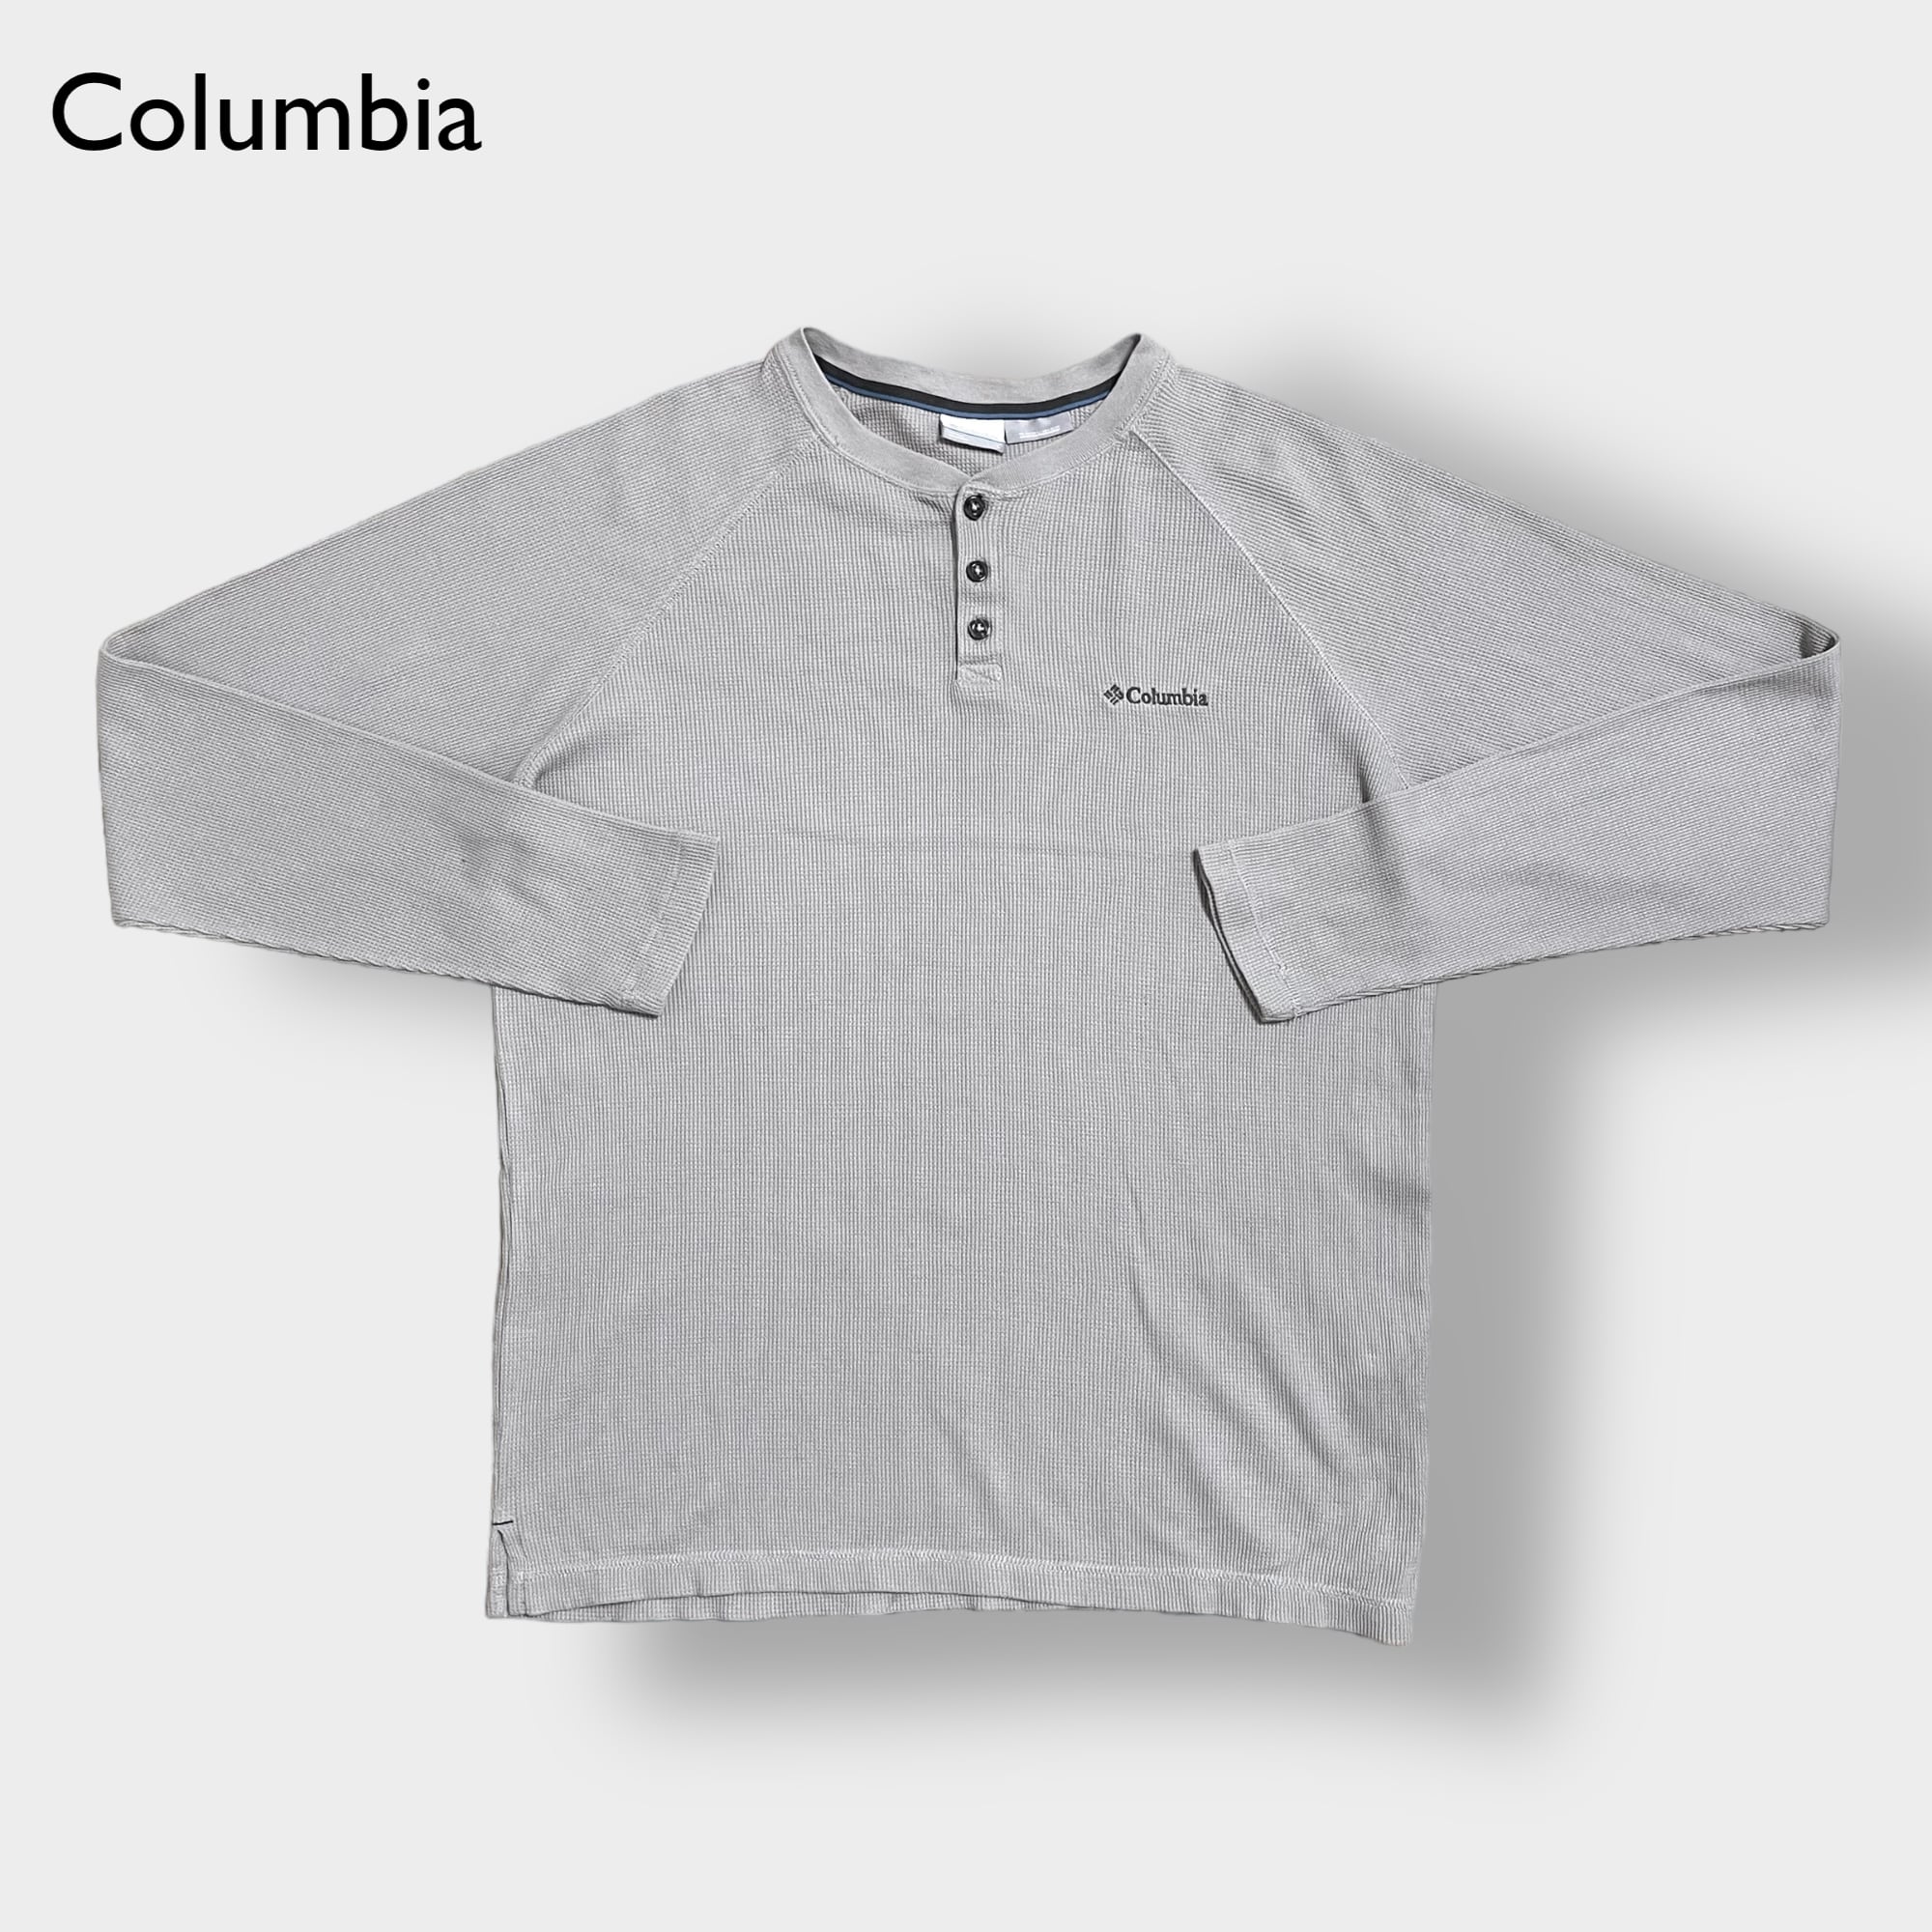 Columbia】ワンポイント 刺繍ロゴ サーマルシャツ ワッフル ヘンリー